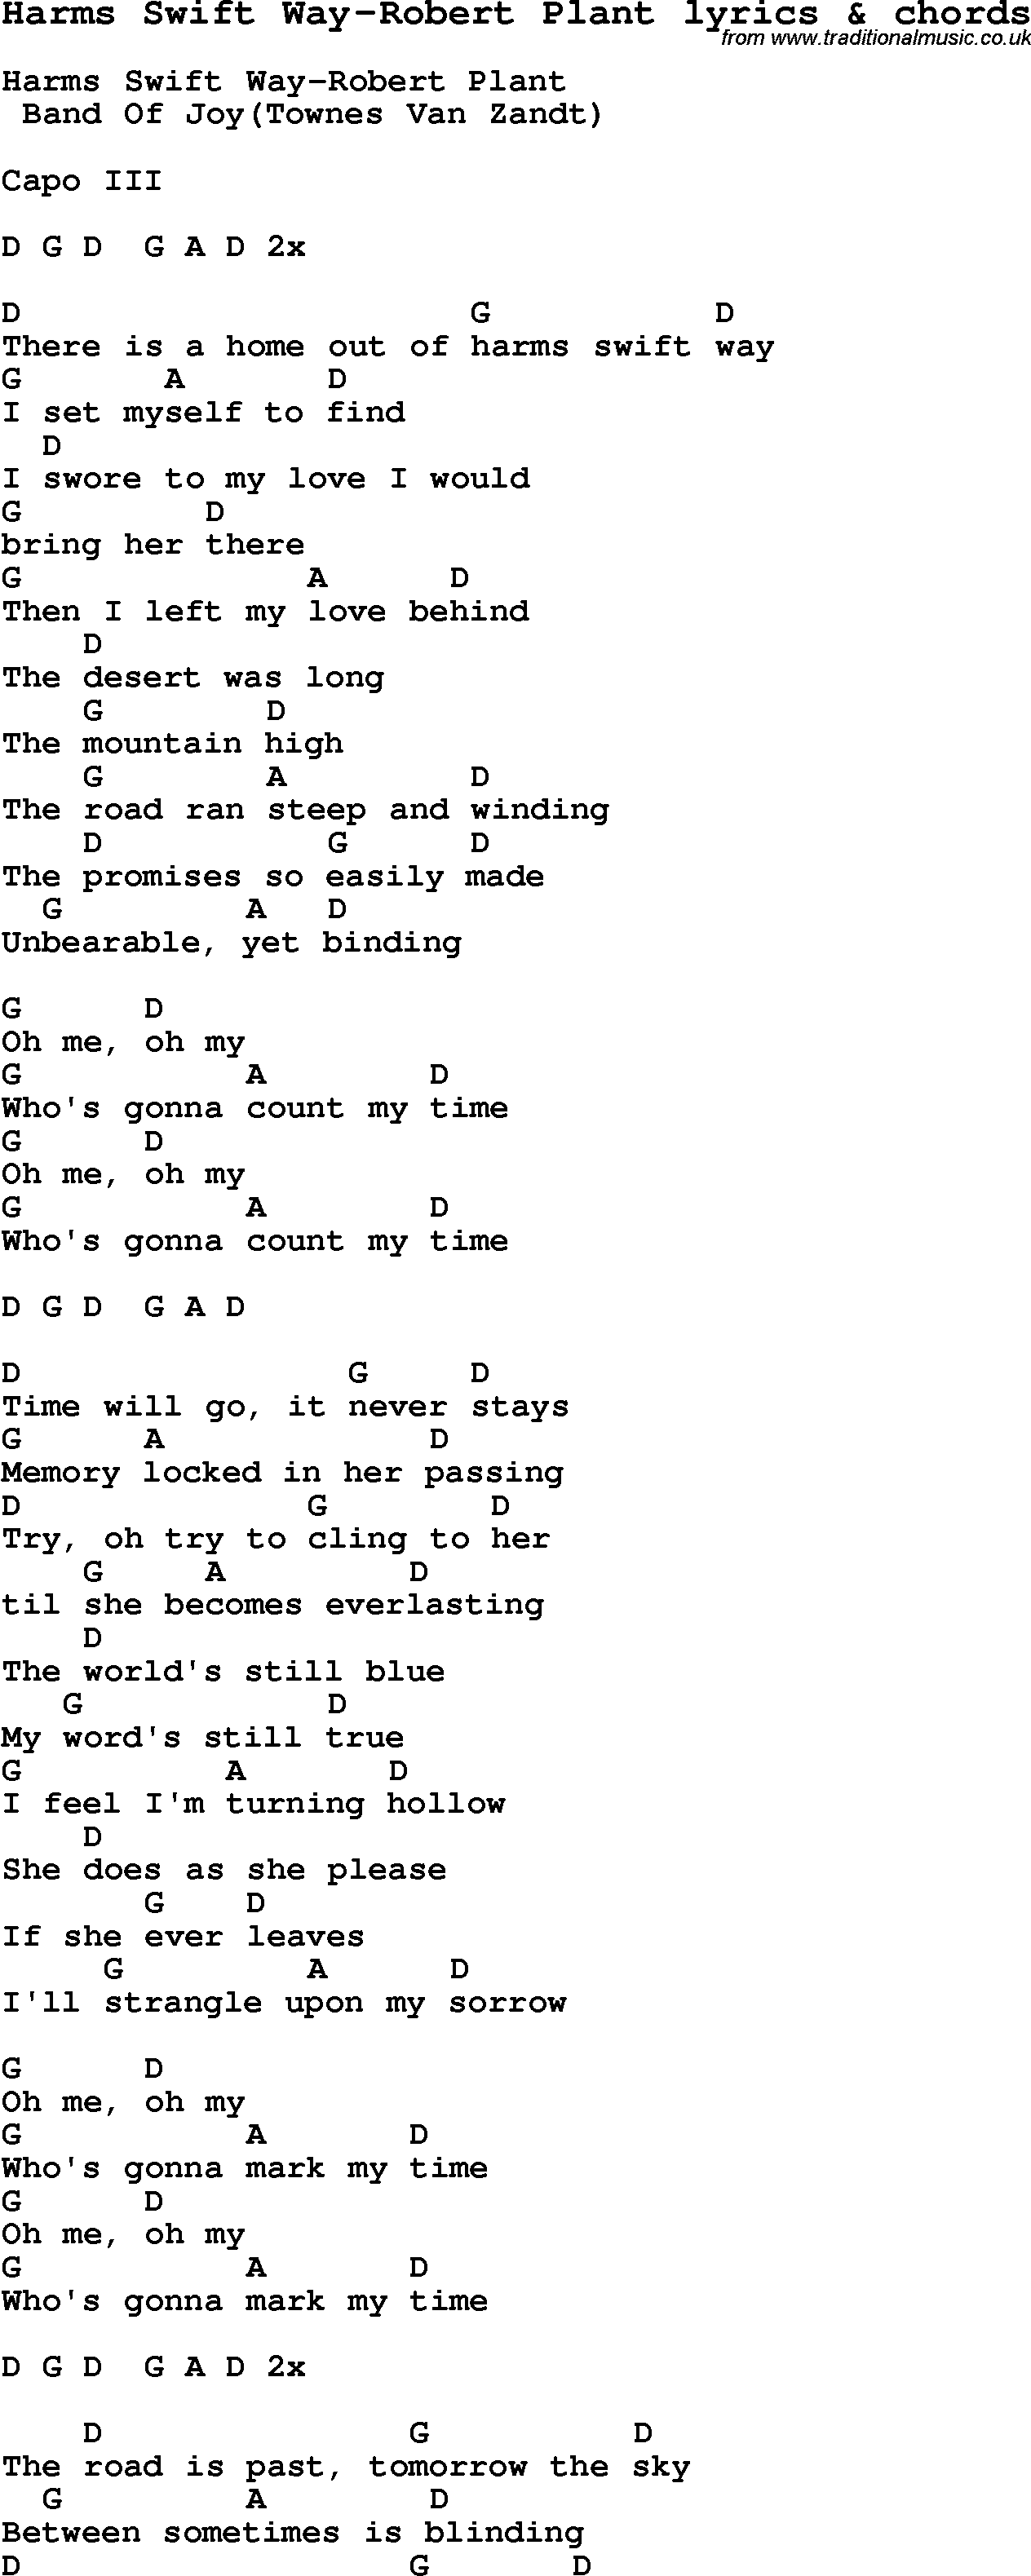 Love Song Lyrics for: Harms Swift Way-Robert Plant with chords for Ukulele, Guitar Banjo etc.